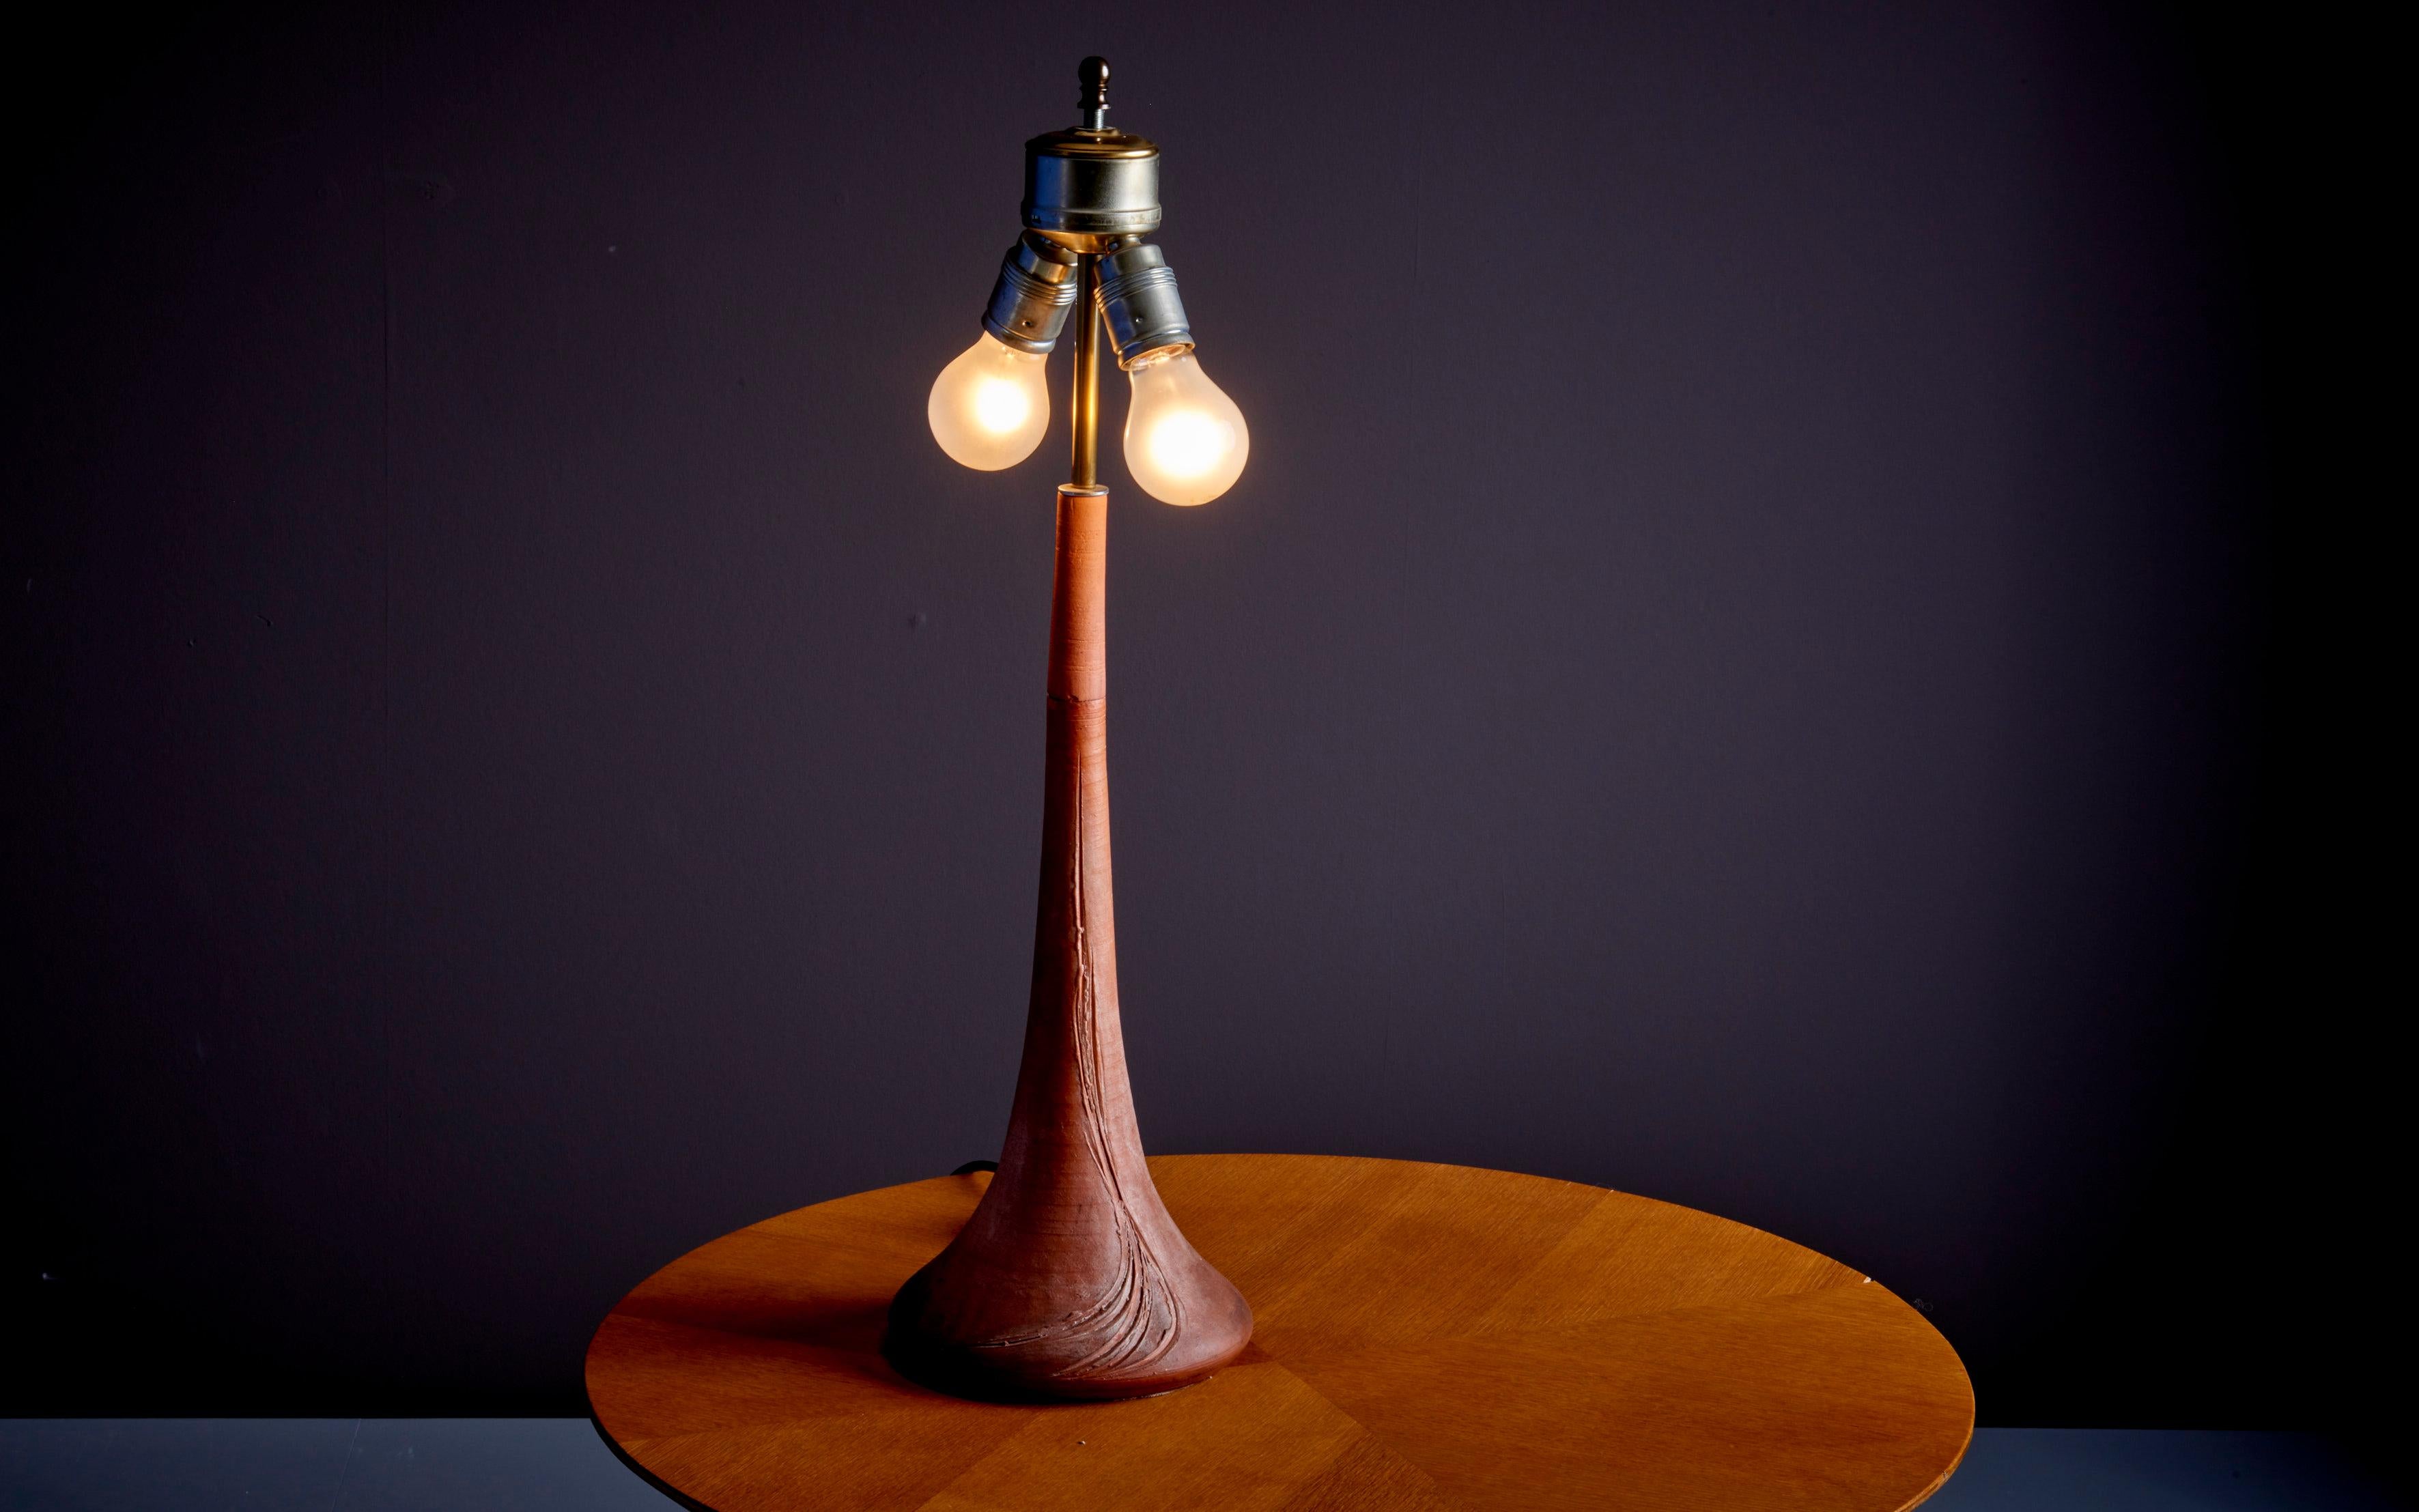 Mid-Century Modern Table Lamp by Marianne Koplin, Germany - 1970s  For Sale